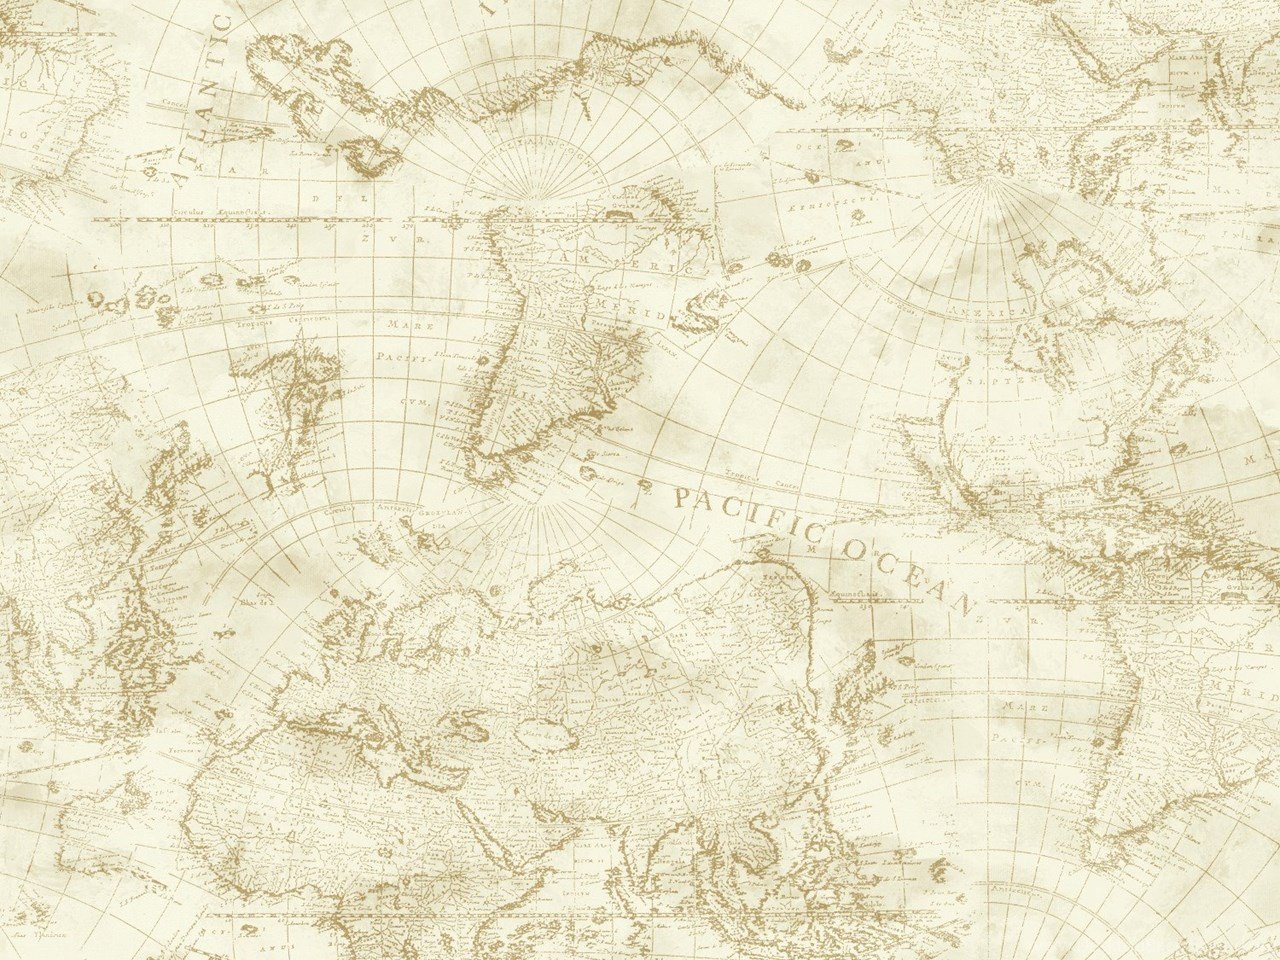 подложка на стол карта мира